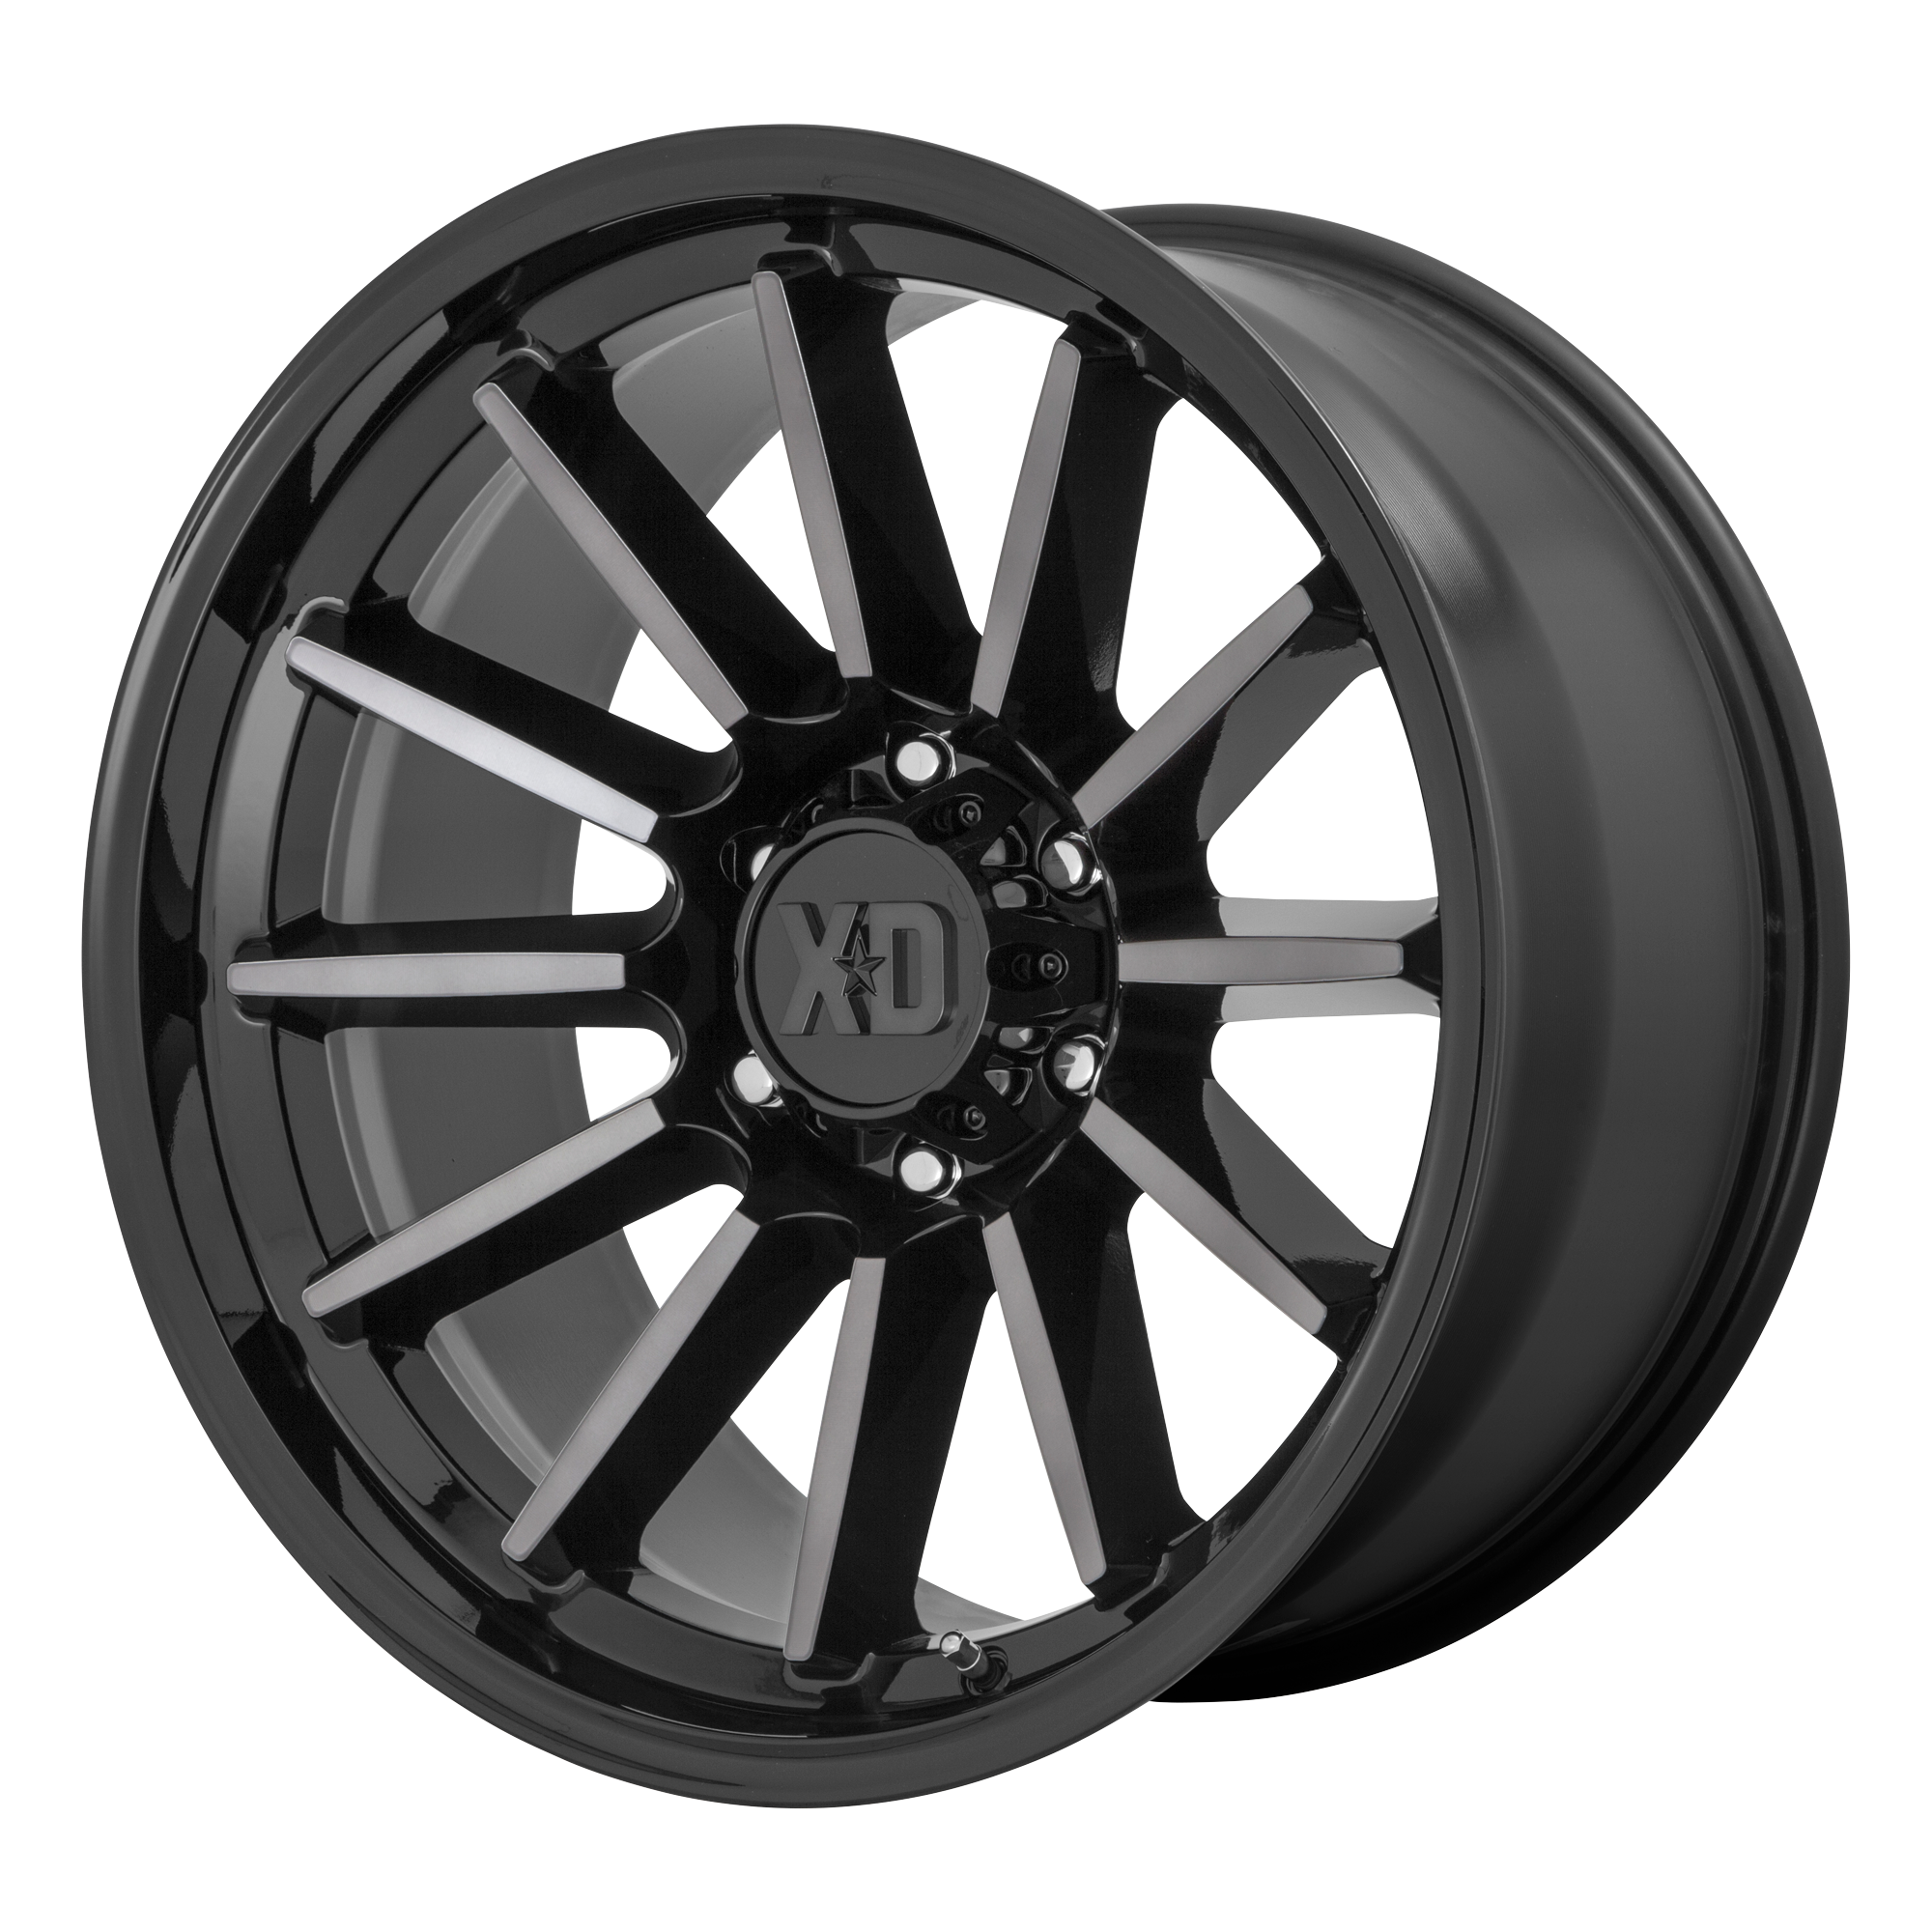 XD 20"x10" Non-Chrome Gloss Black Machined With Gray Tint Custom Wheel ARSWCWXD85521068418N